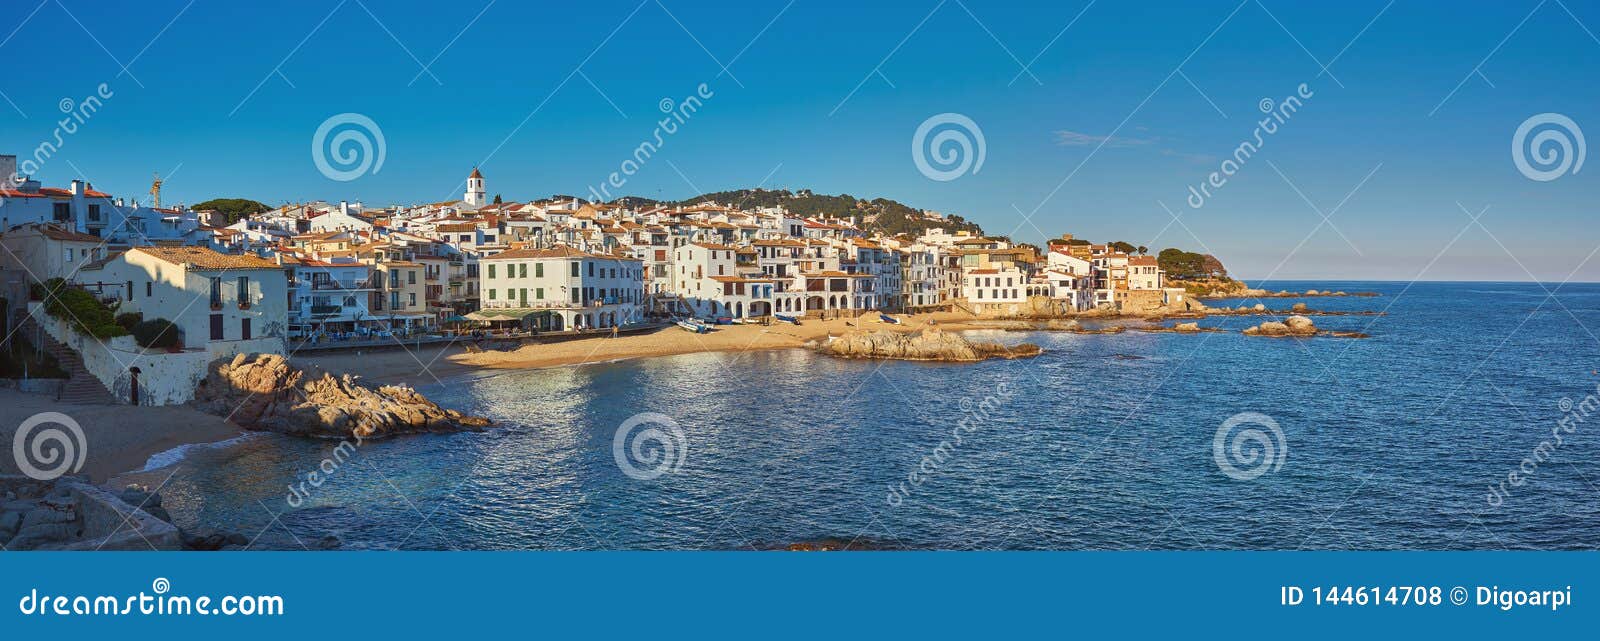 picturesque landscape from a small spanish village in costa brava coastal, calella de palafrugell